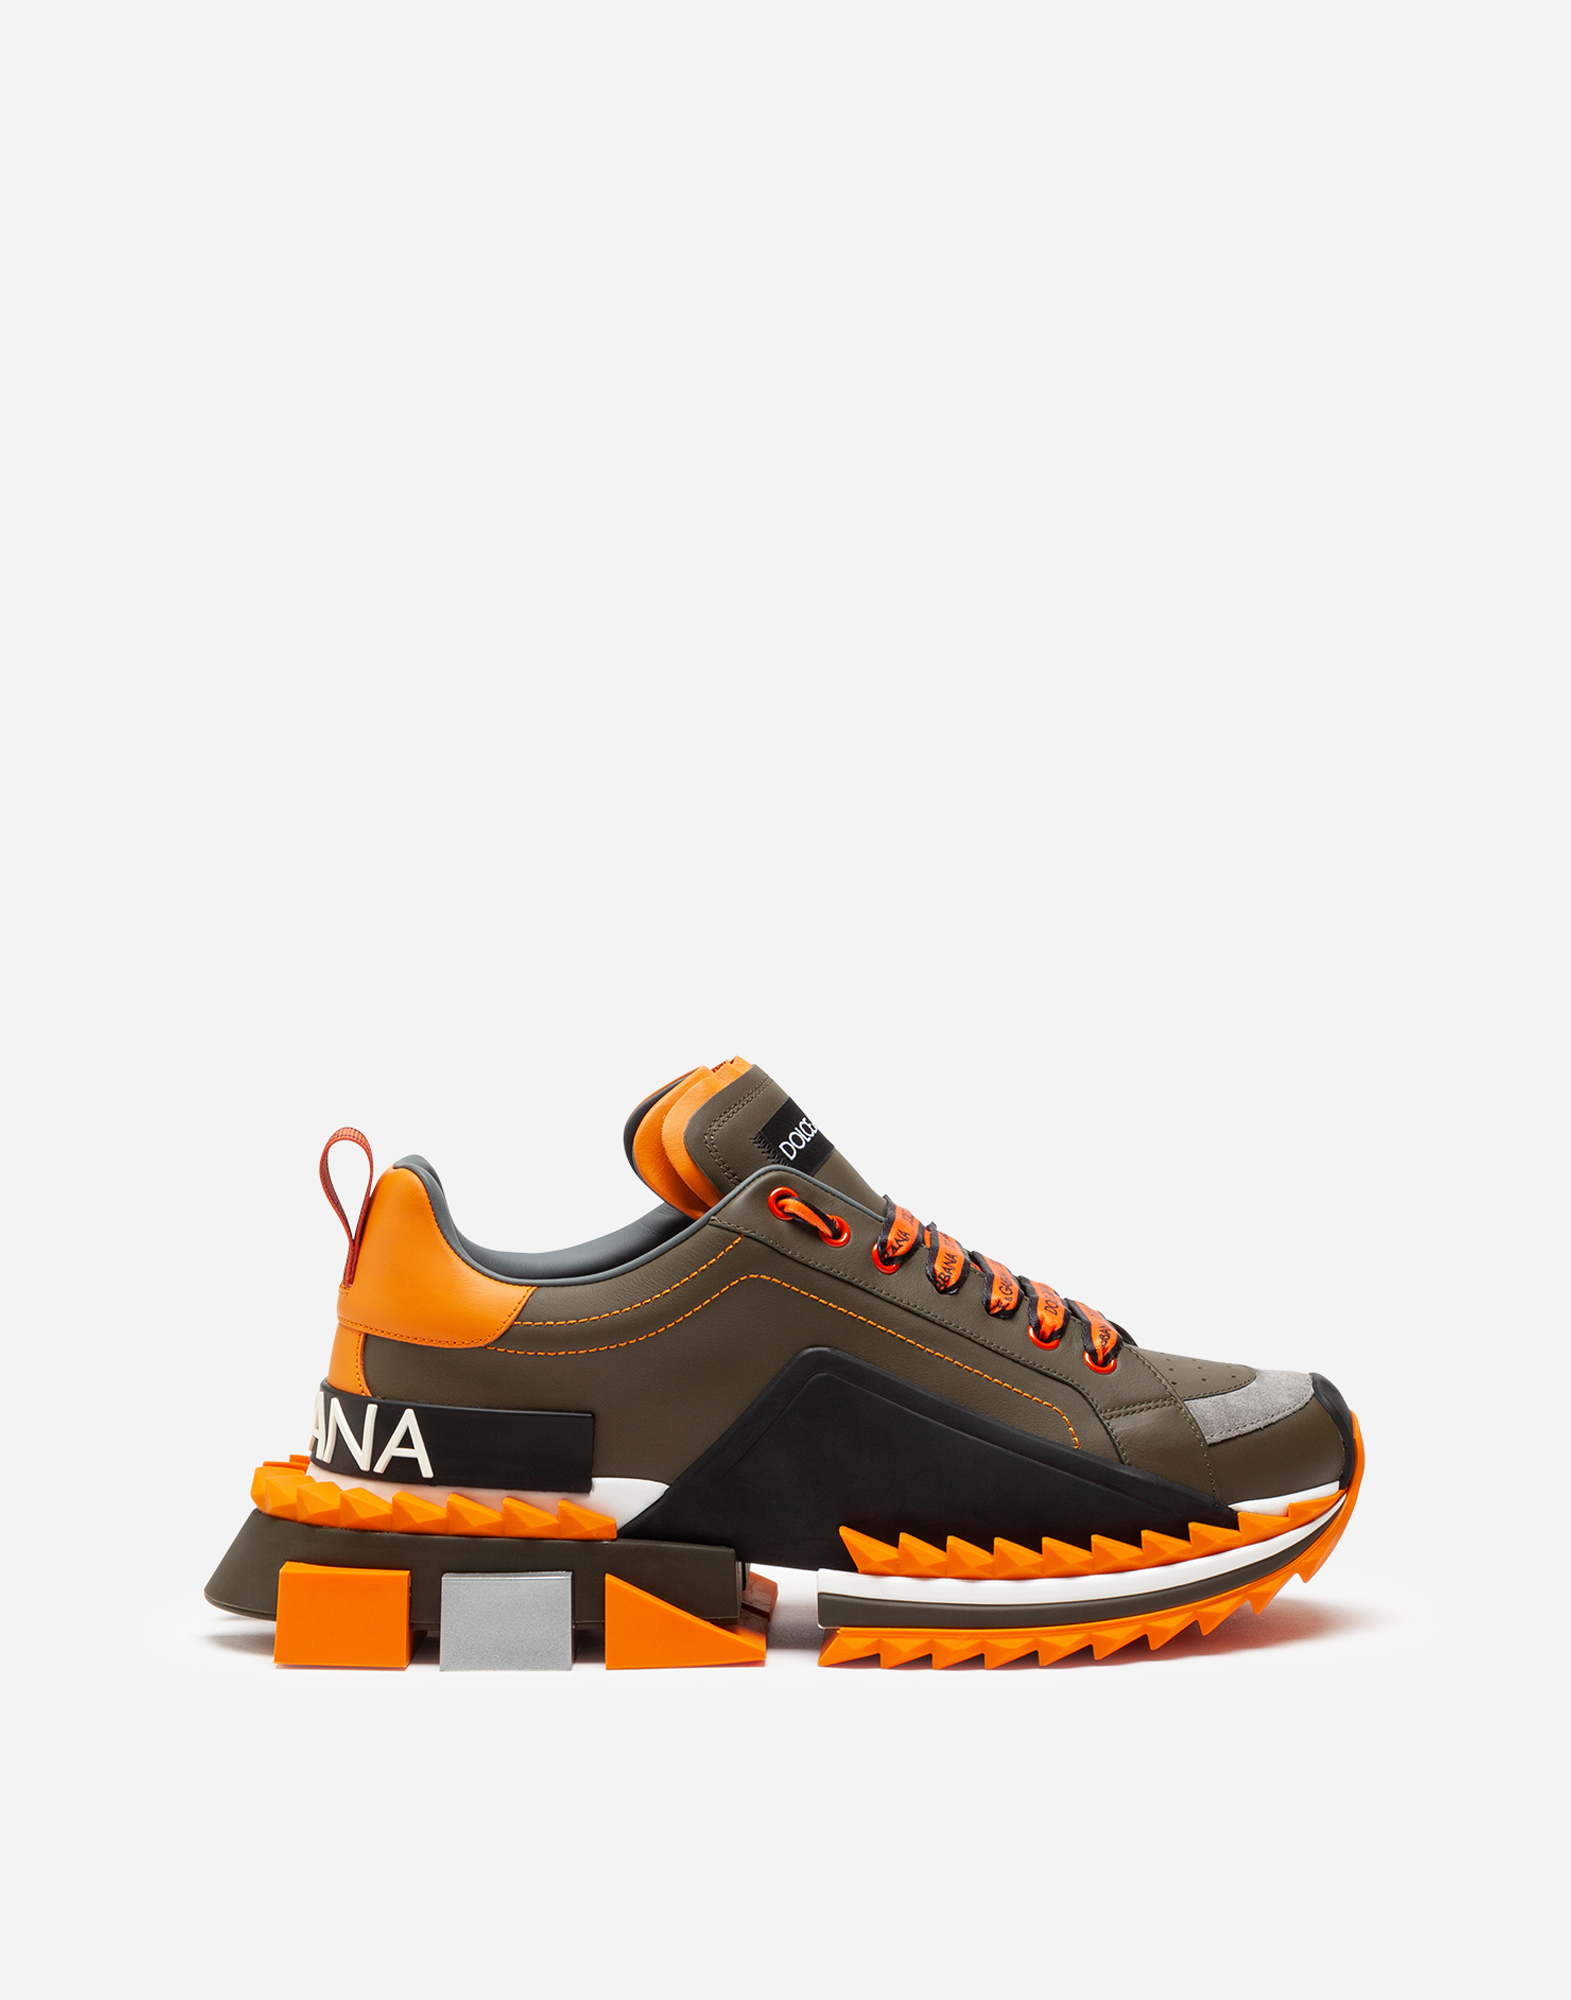 dolce gabbana orange sneakers